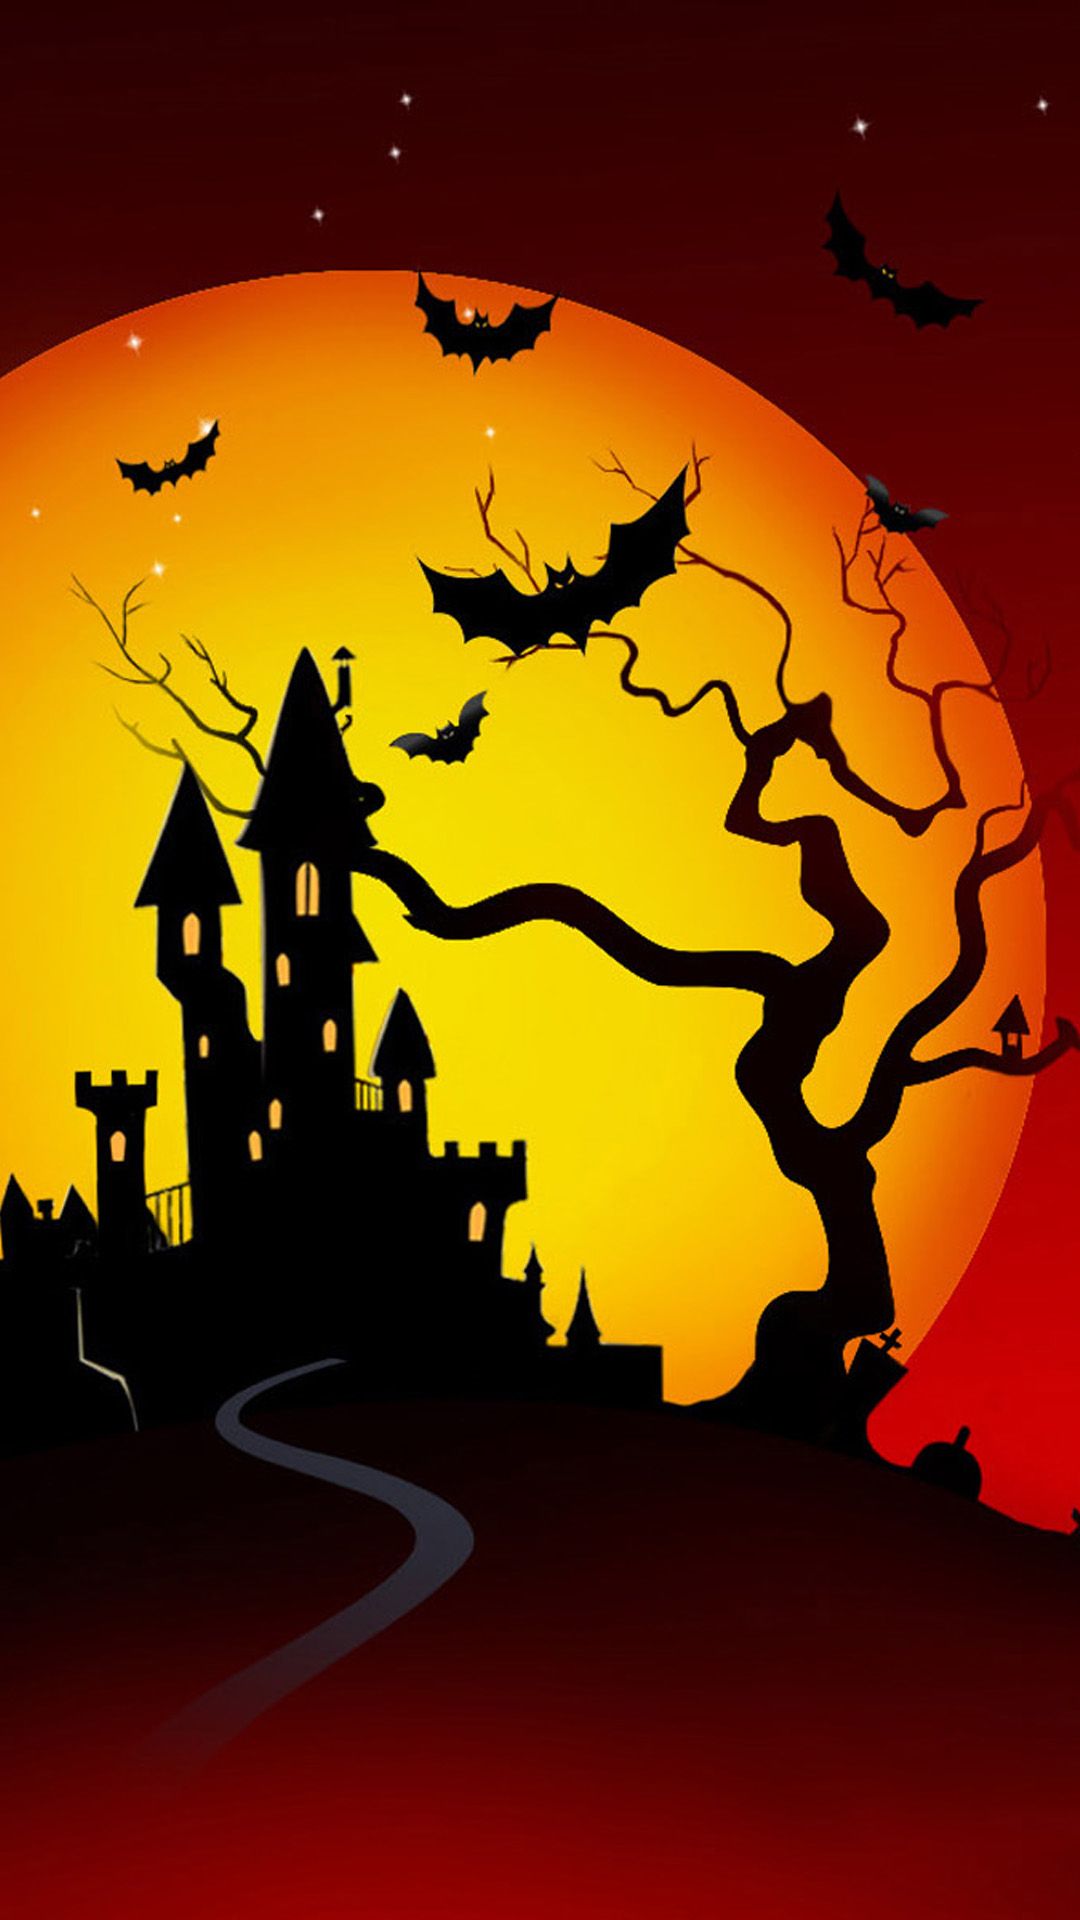 Happy Halloween Download Free HD+ Wallpaper for iPhone 6s, 7s, 8s, 10